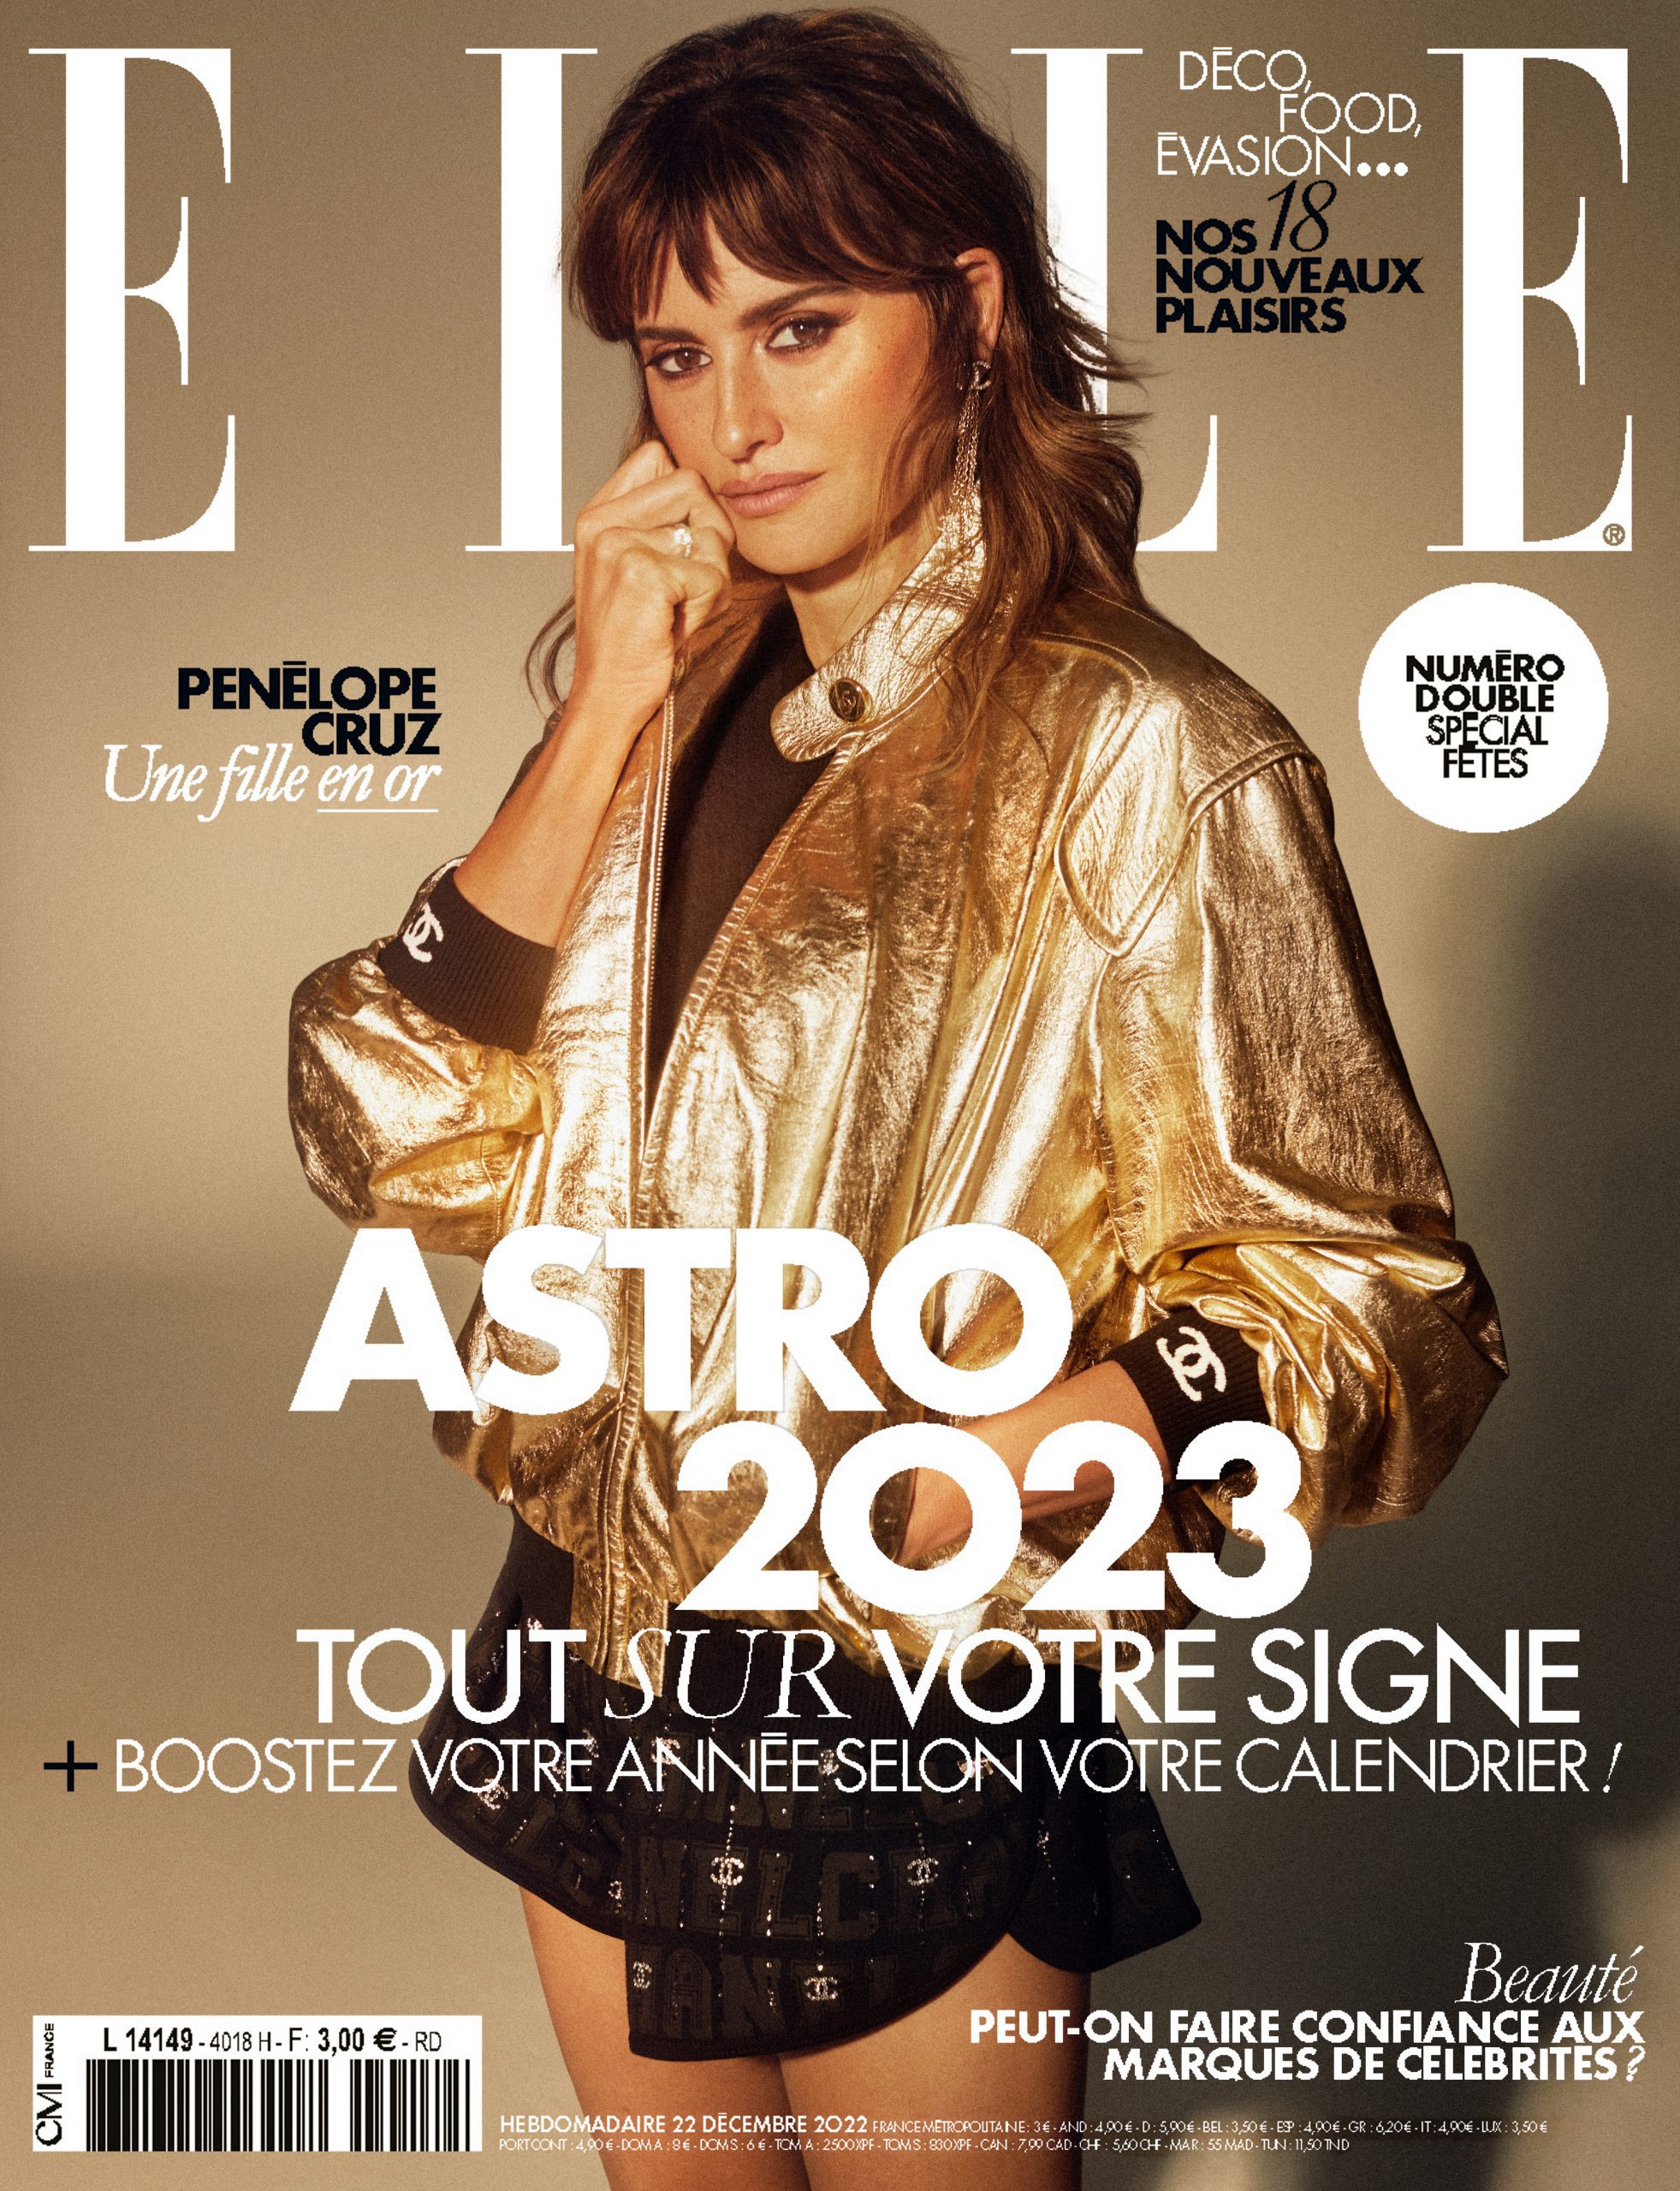 Penelope Cruz for Elle France by Xavi Gordo | Raquel Sueiro